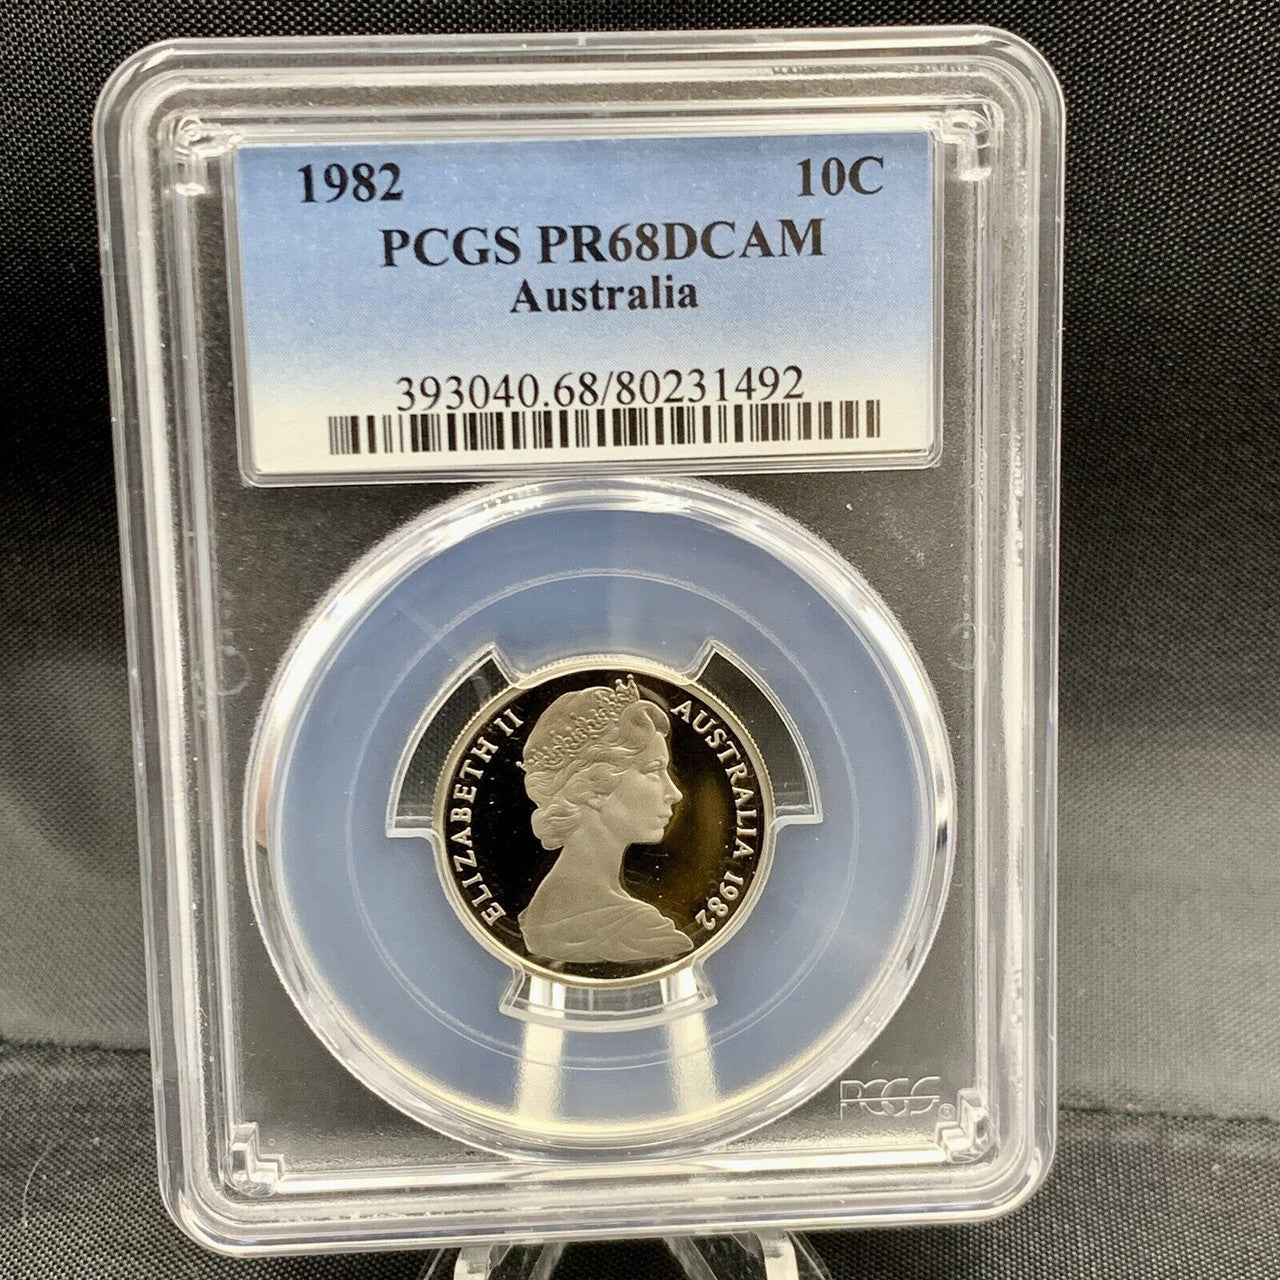 1982 Australian 10c PCGS PR68DCAM Proof Coin